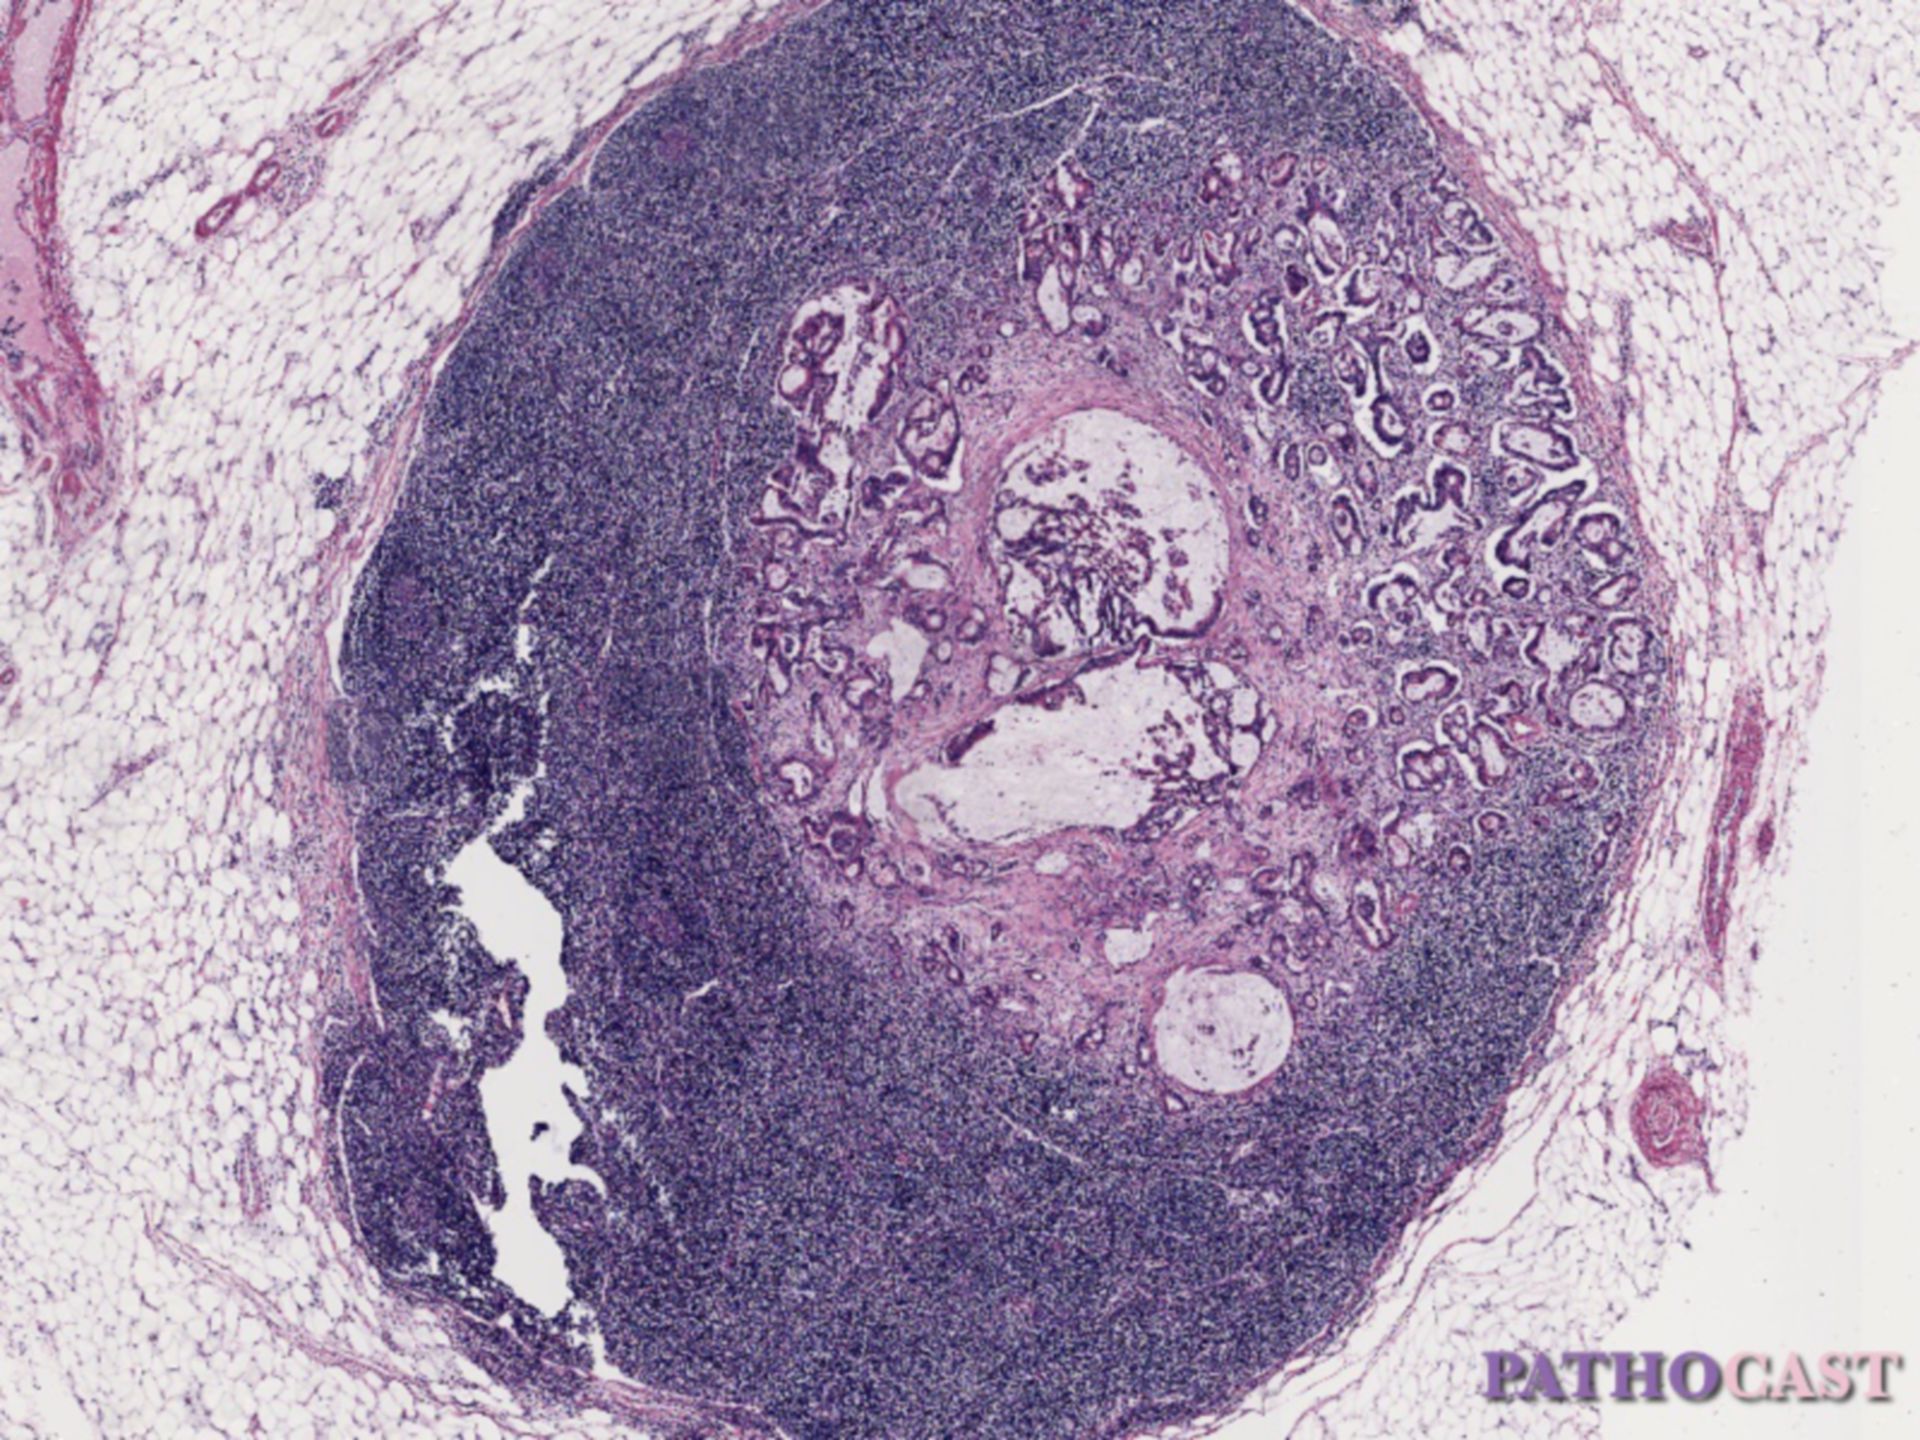 Lymph node metastasis of colon cancer